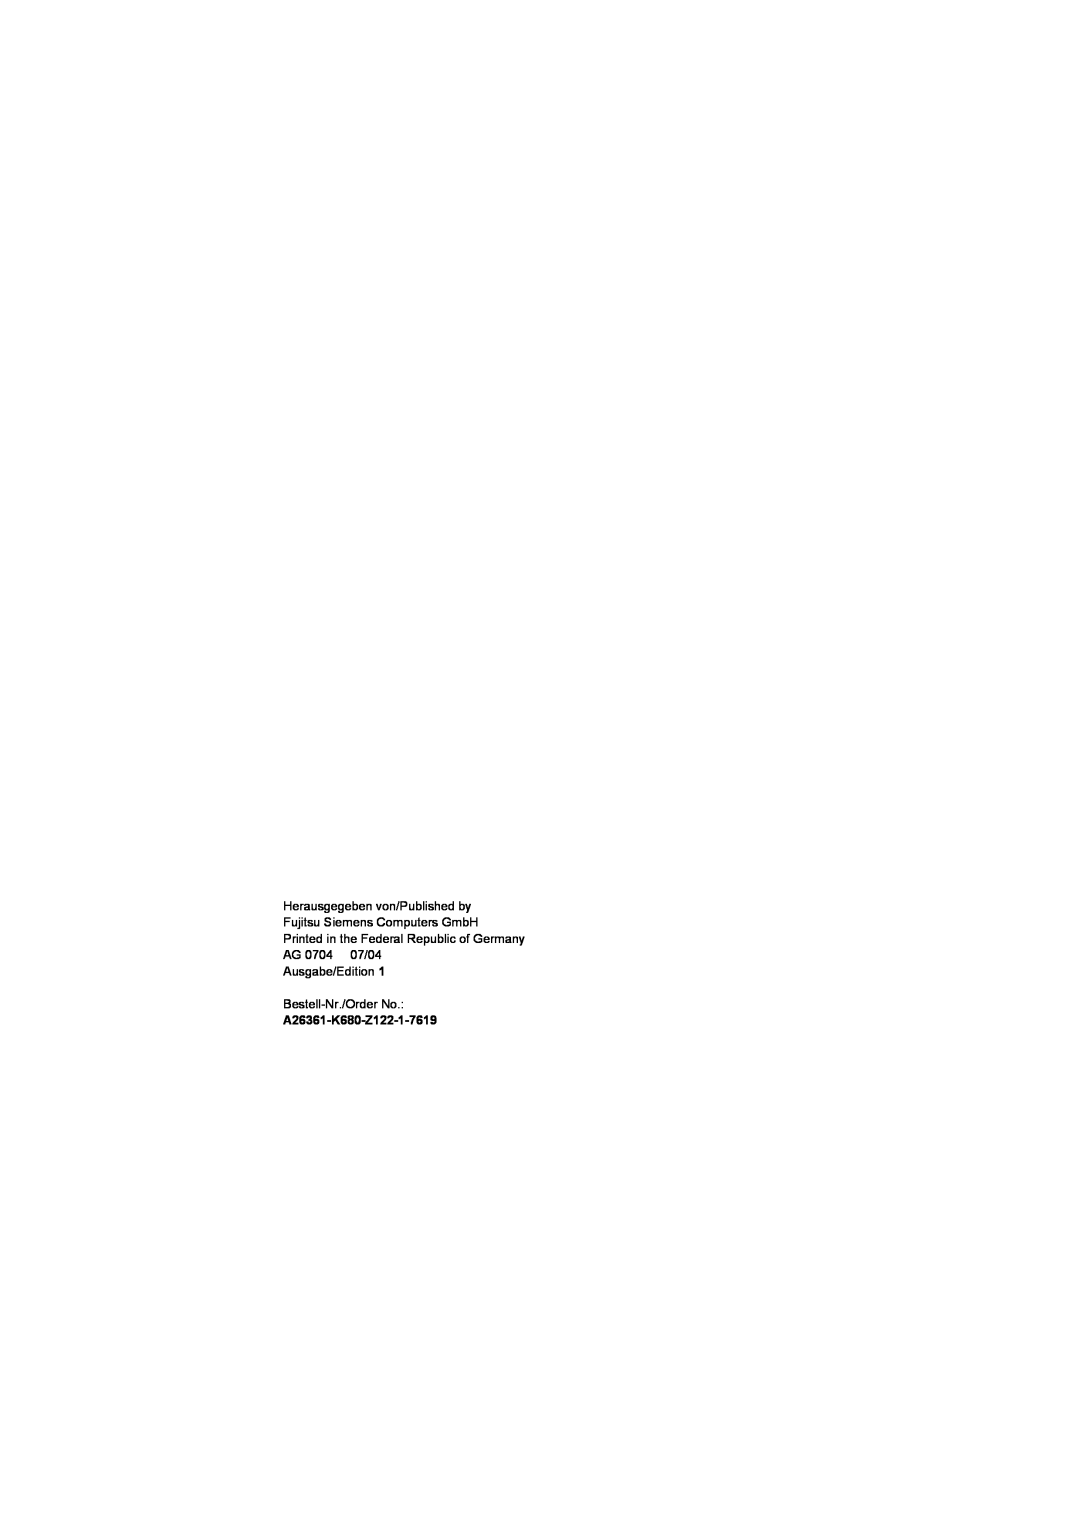 Fujitsu V810, R630 manual Ausgabe/Edition Bestell-Nr./Order No, A26361-K680-Z122-1-7619 